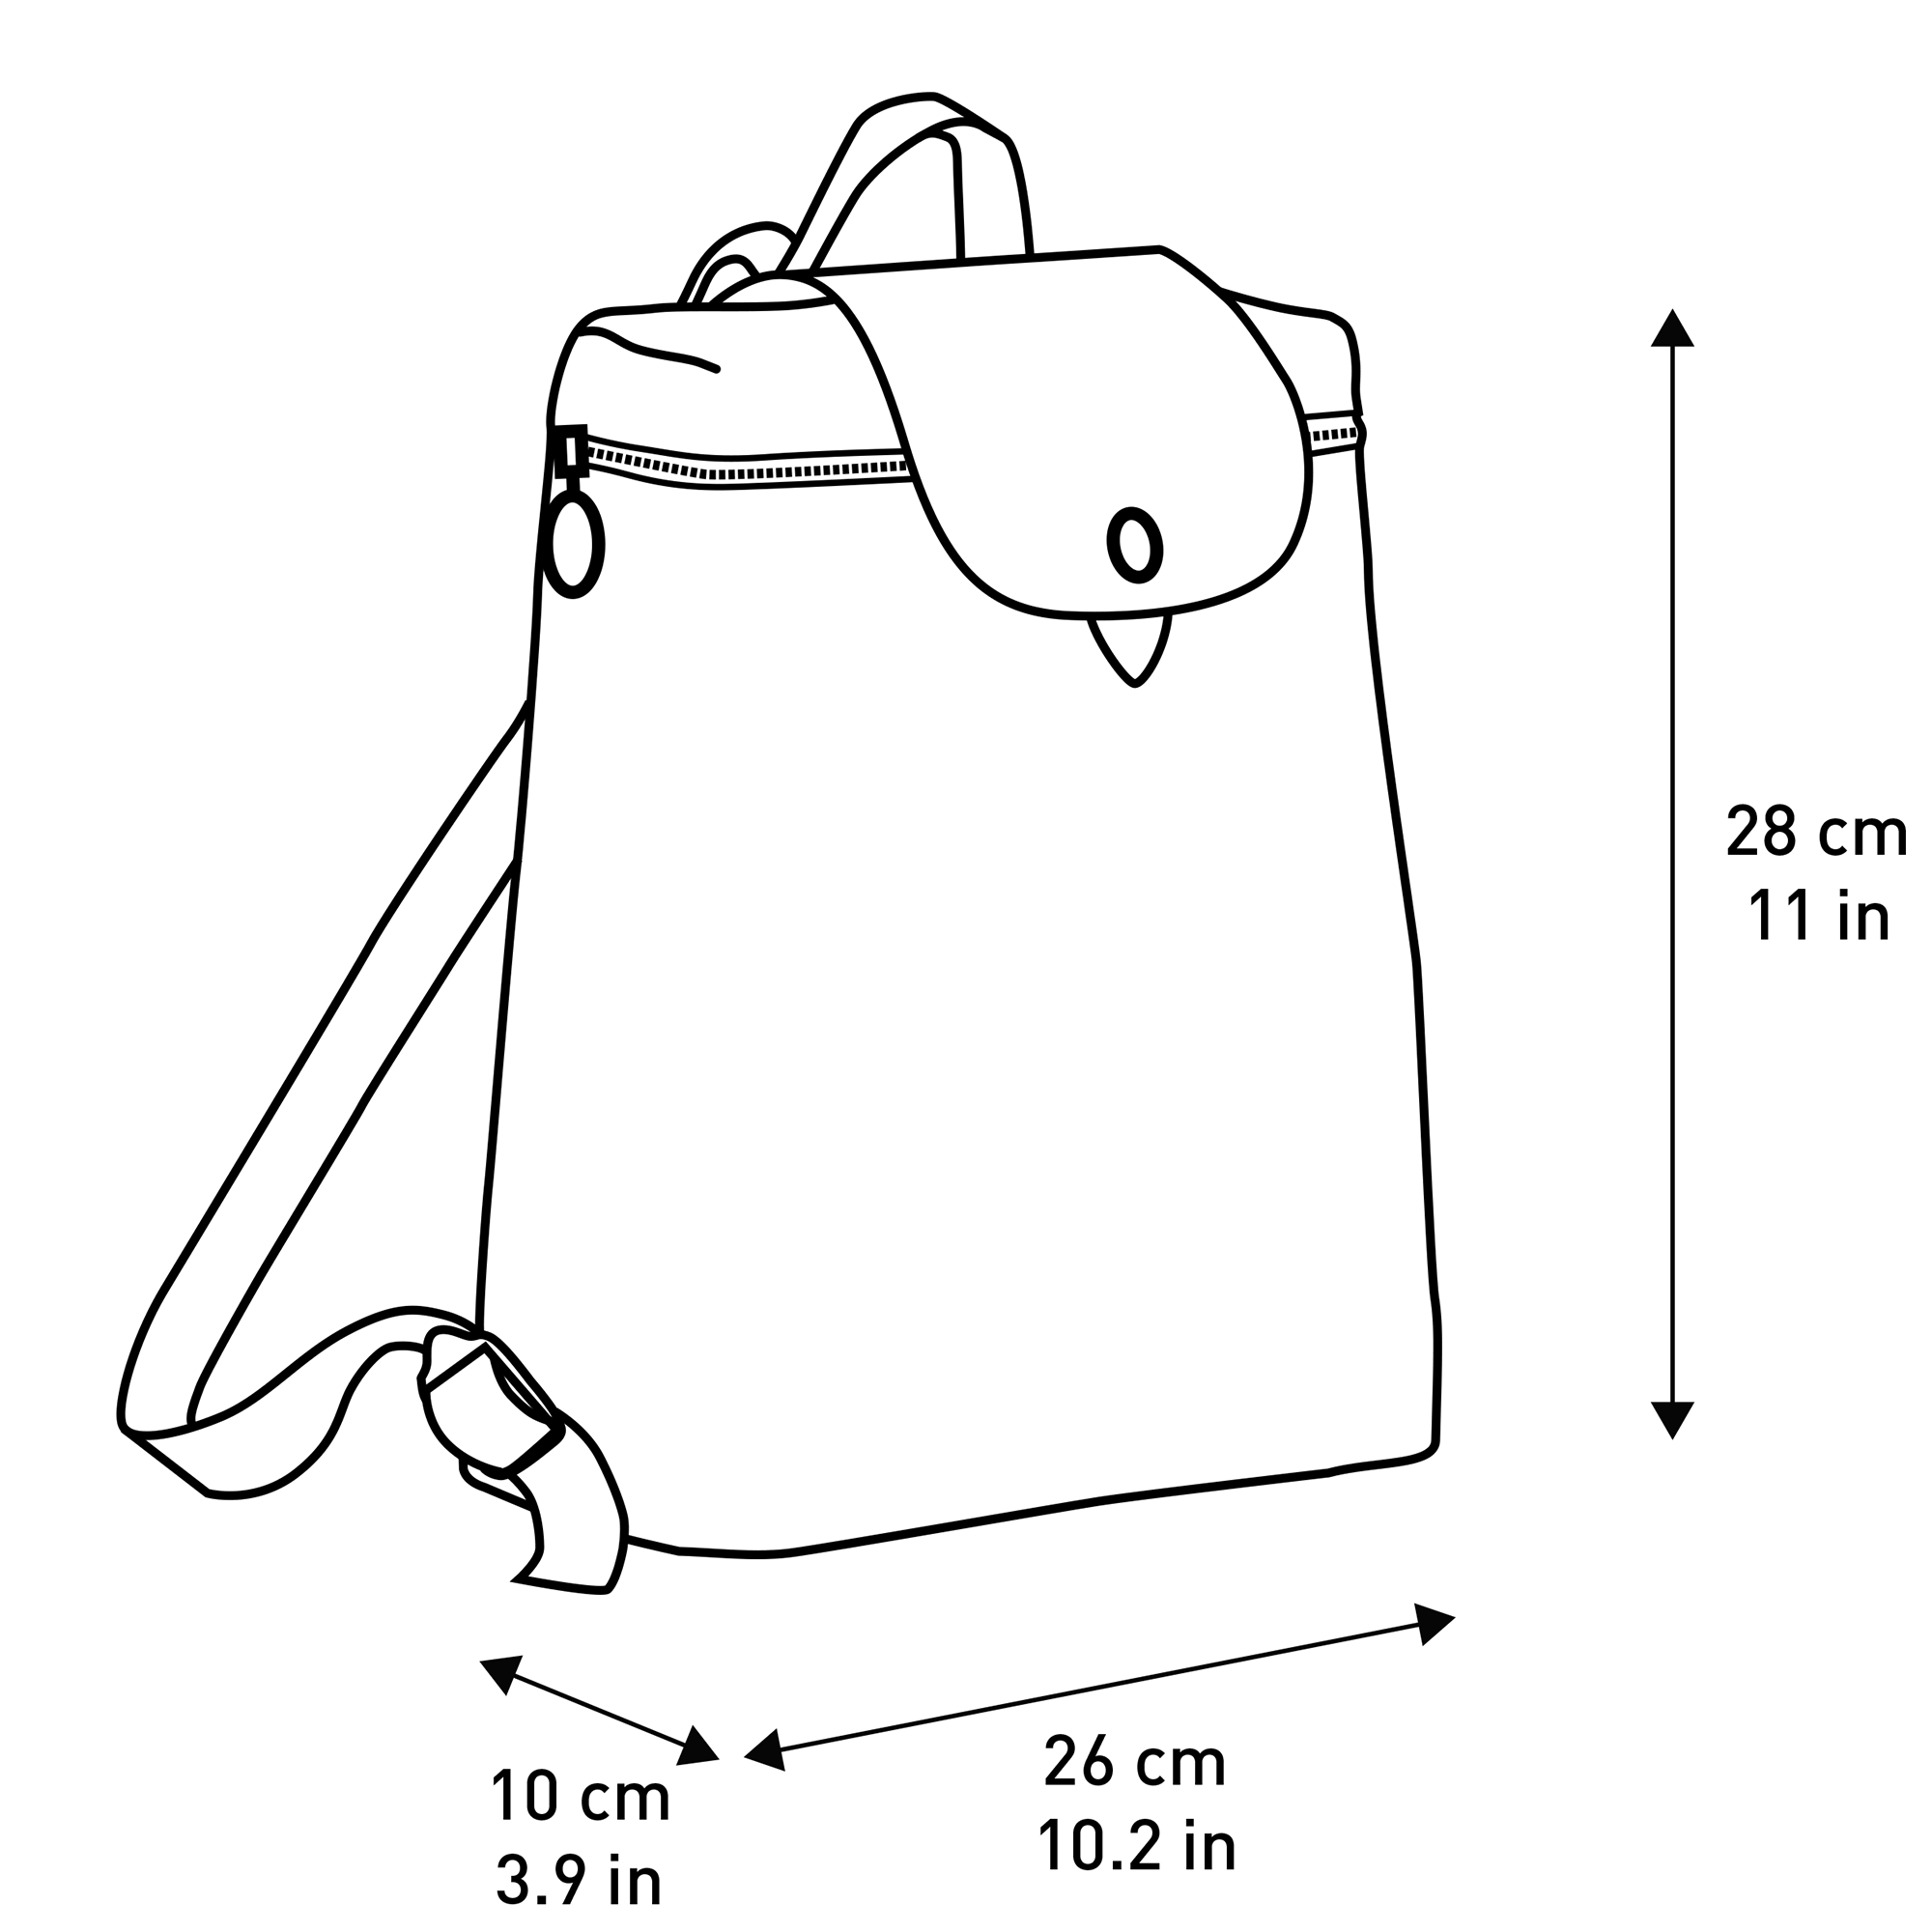 longchamp prismatic backpack